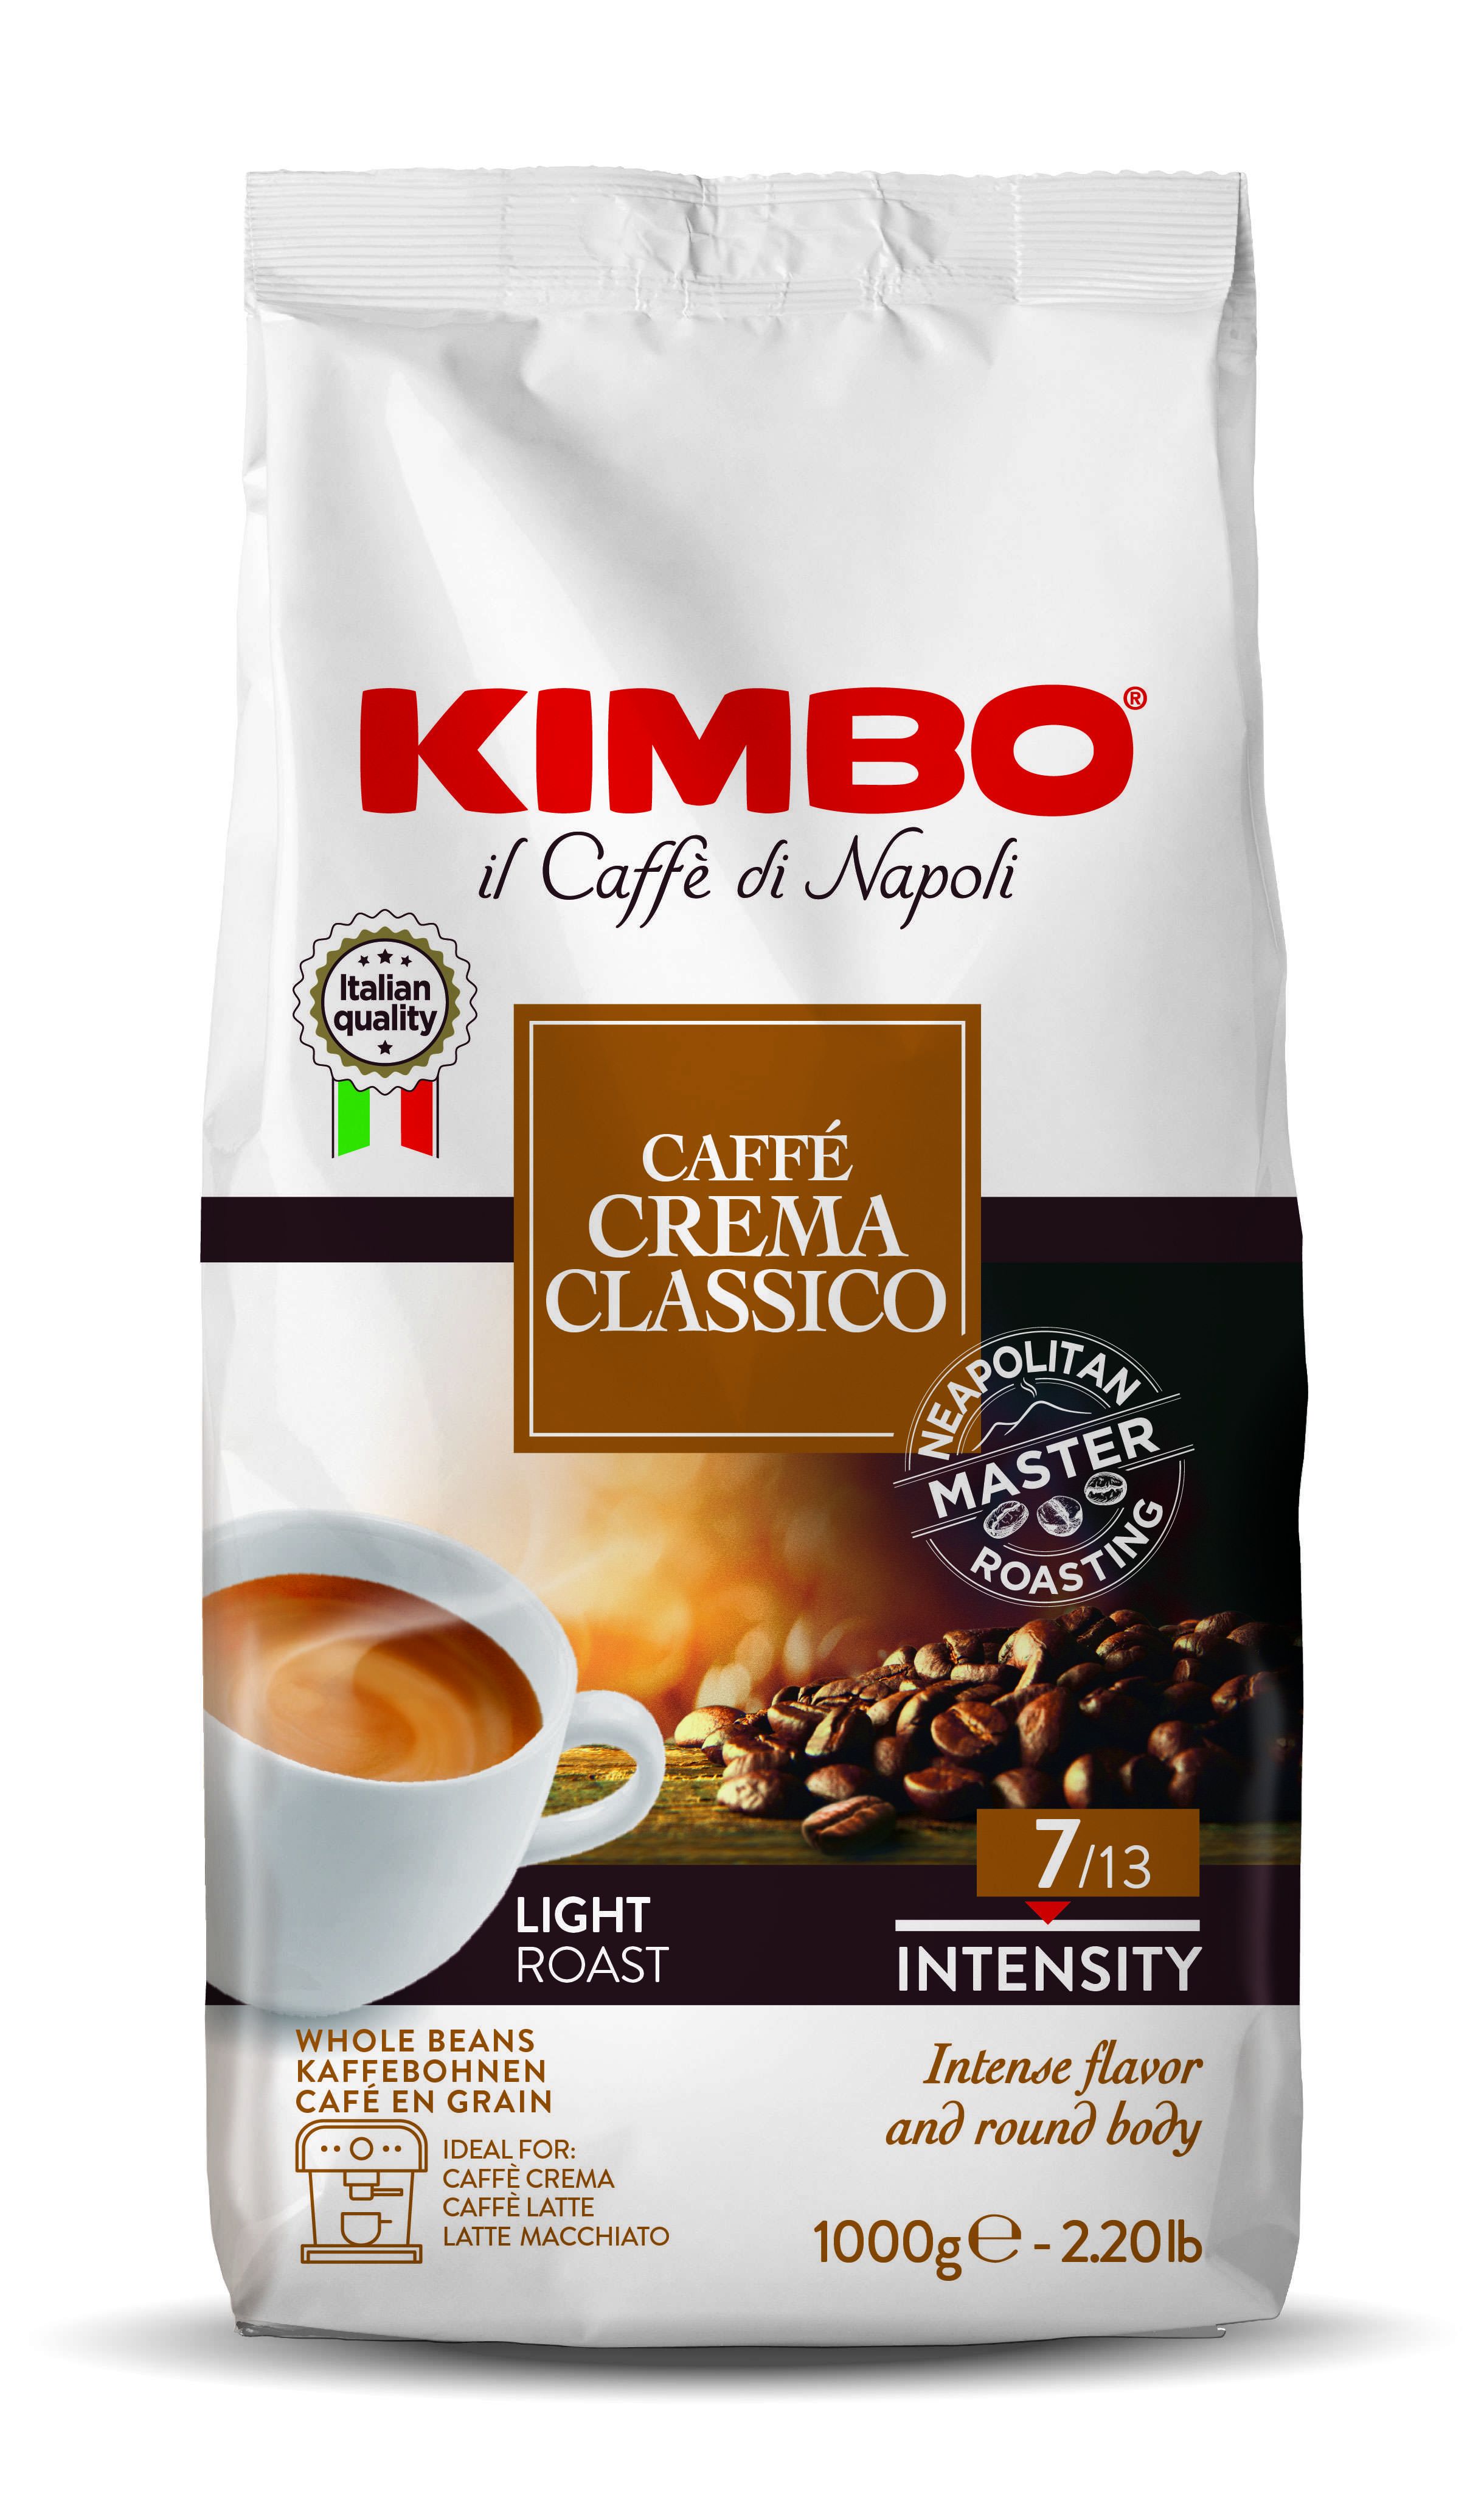 KIMBO S.p.A. CaffeCrema Classico ganze Kaffeebohnen 1kg